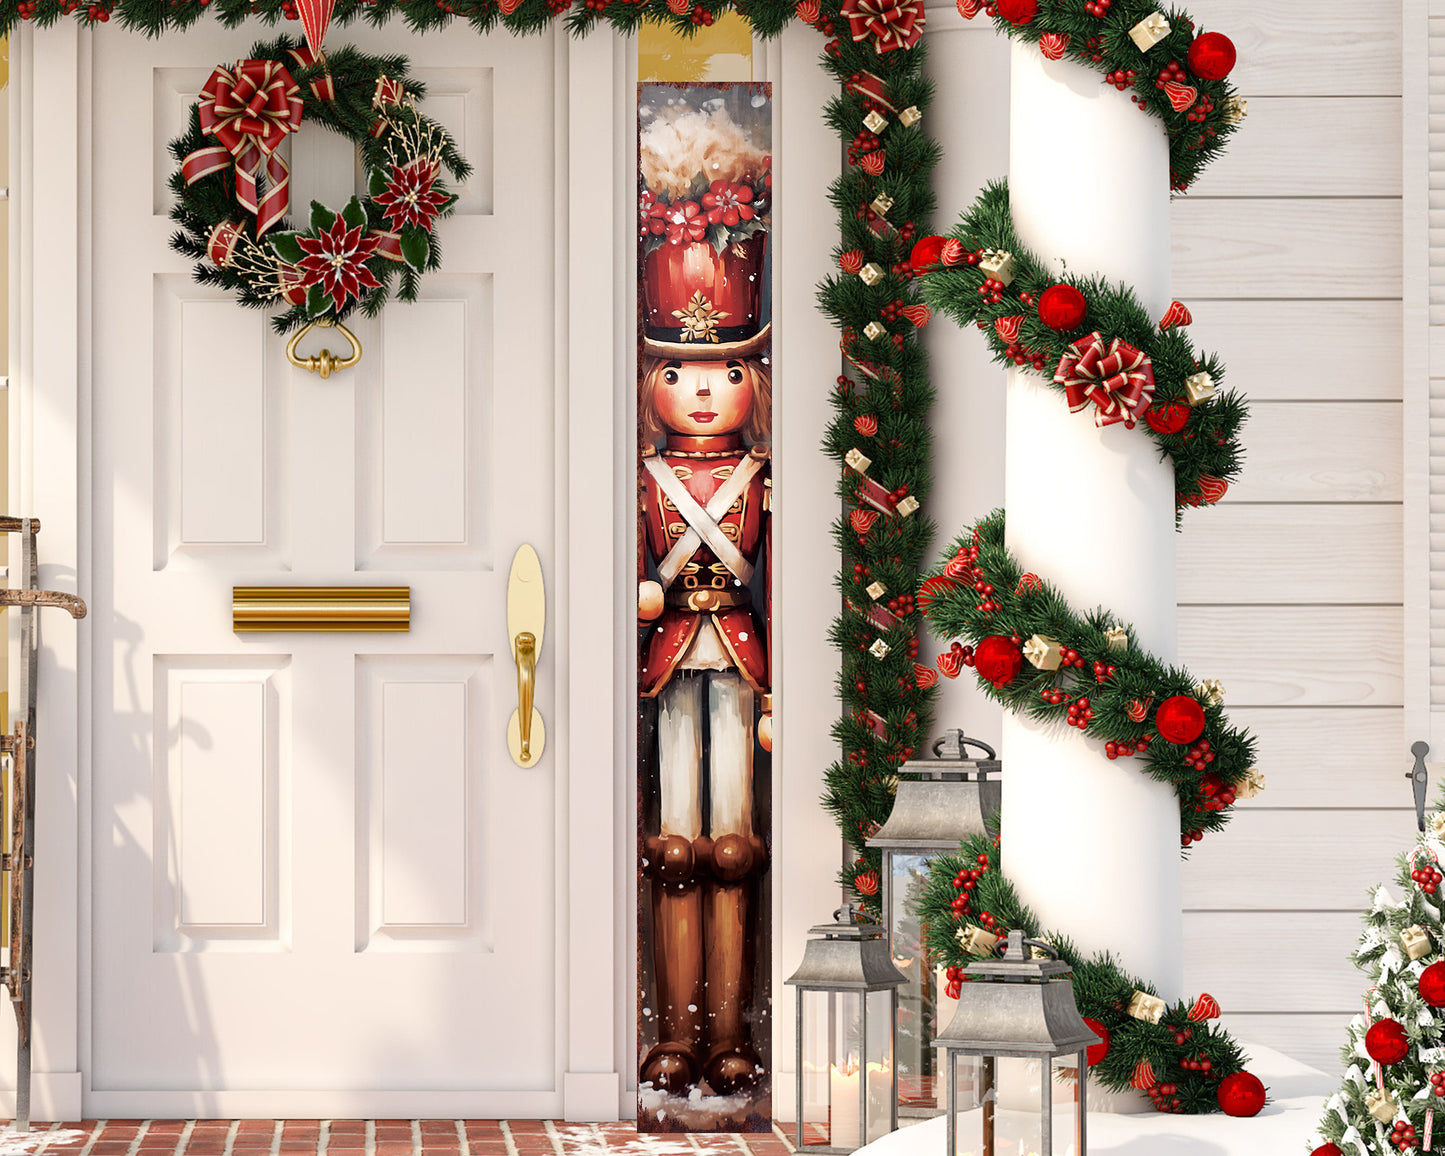 72in Girl Nutcracker Soldier Christmas Sign for Front Porch - Christmas Decor, Modern Farmhouse Entryway Decor for Front Door